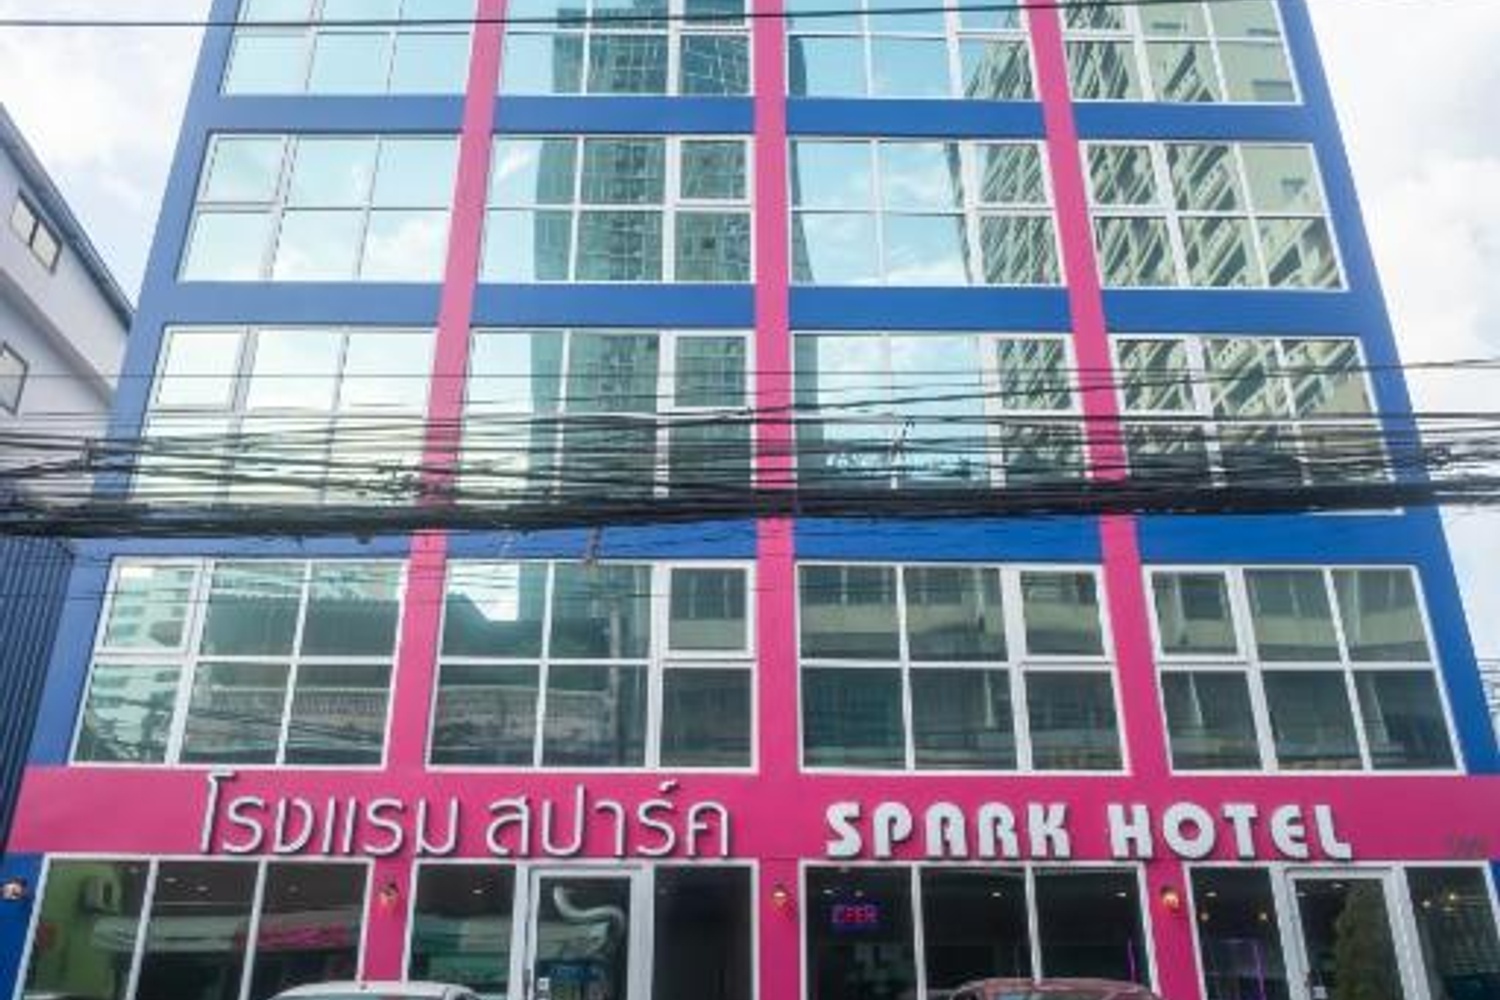 Spark Hotel - Image 0